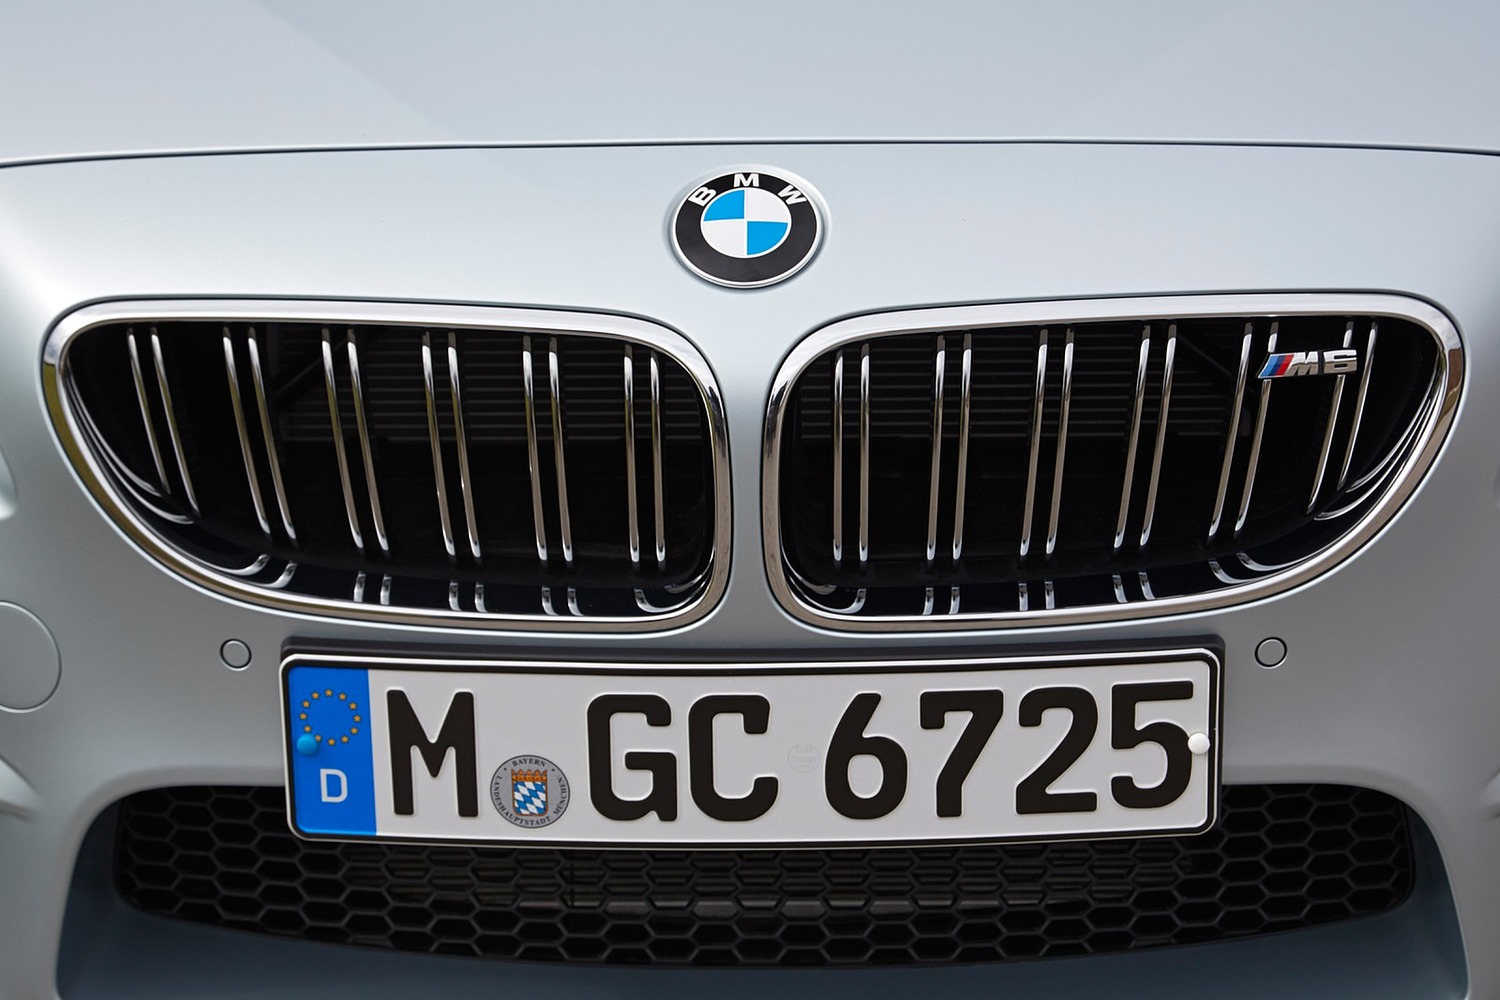 BMW M6 Gran Coupe Sedan Front Badge (2017 model year shown)